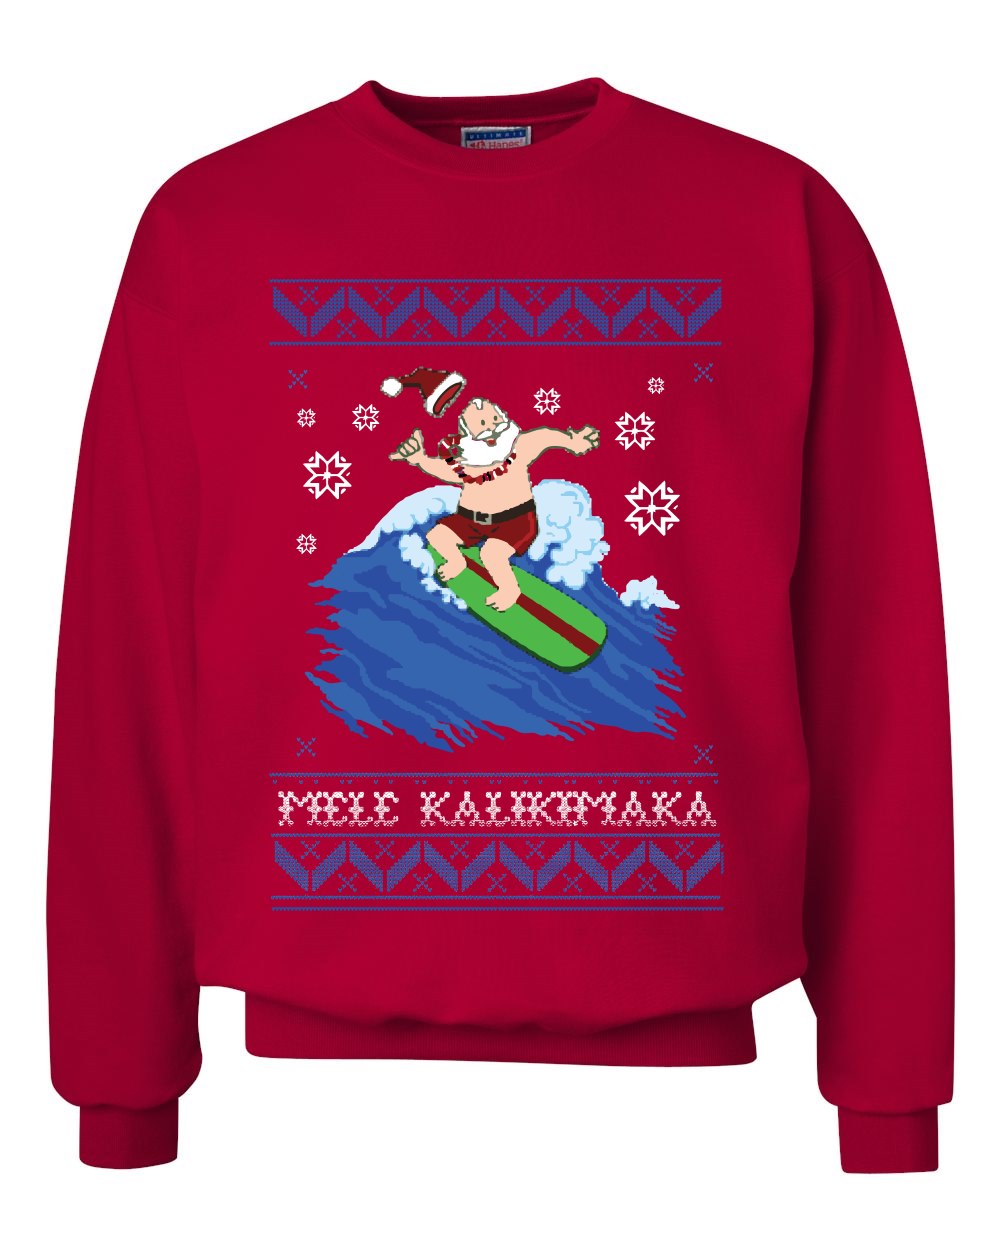 BORD Apparel Santa Mele Kalikimaka Ugly Christmas Sweatshirt